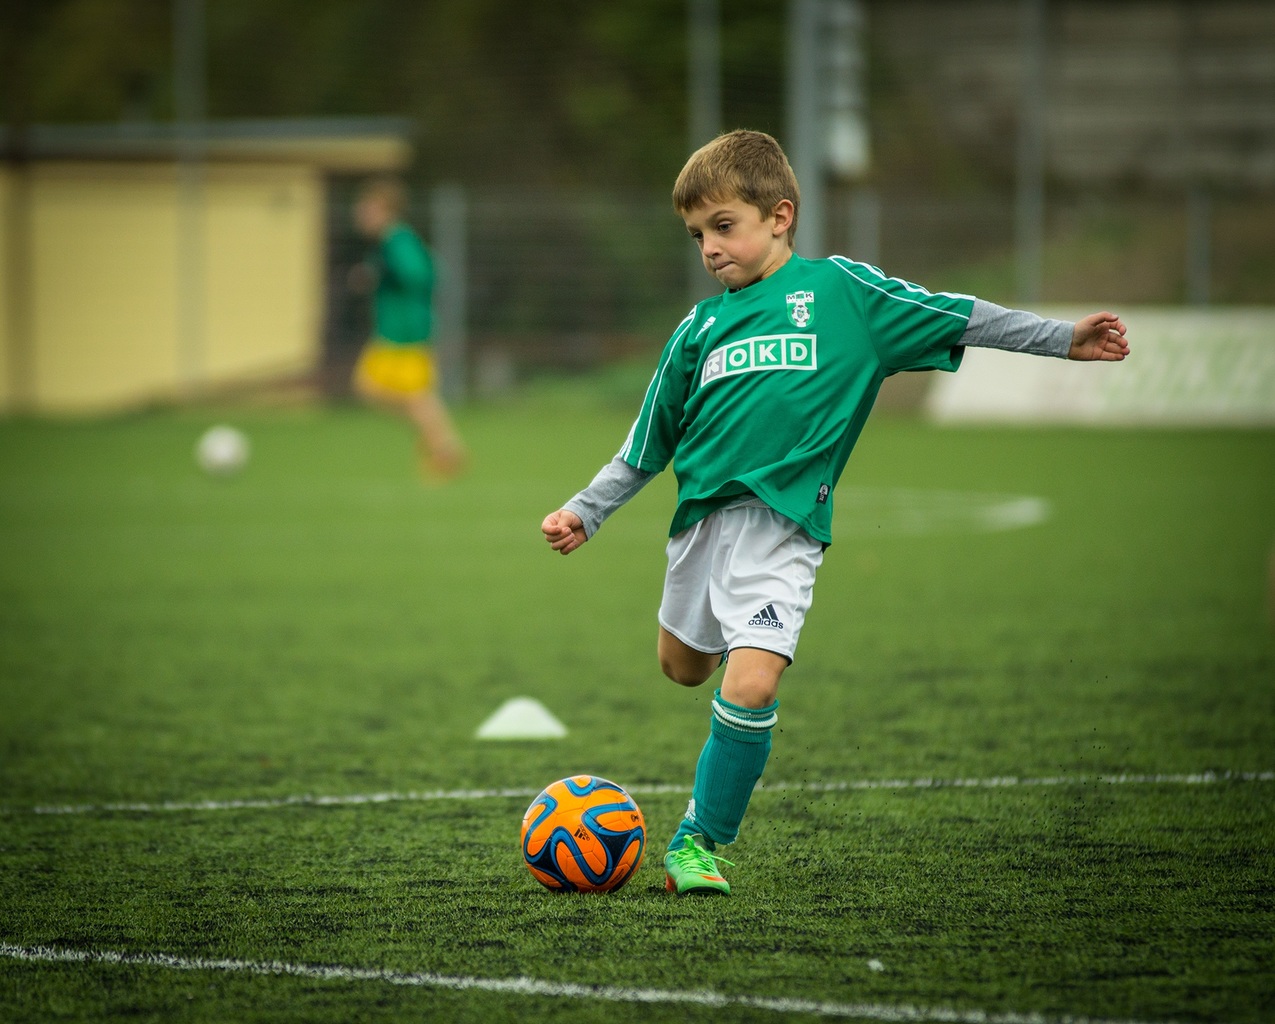 Sports among children